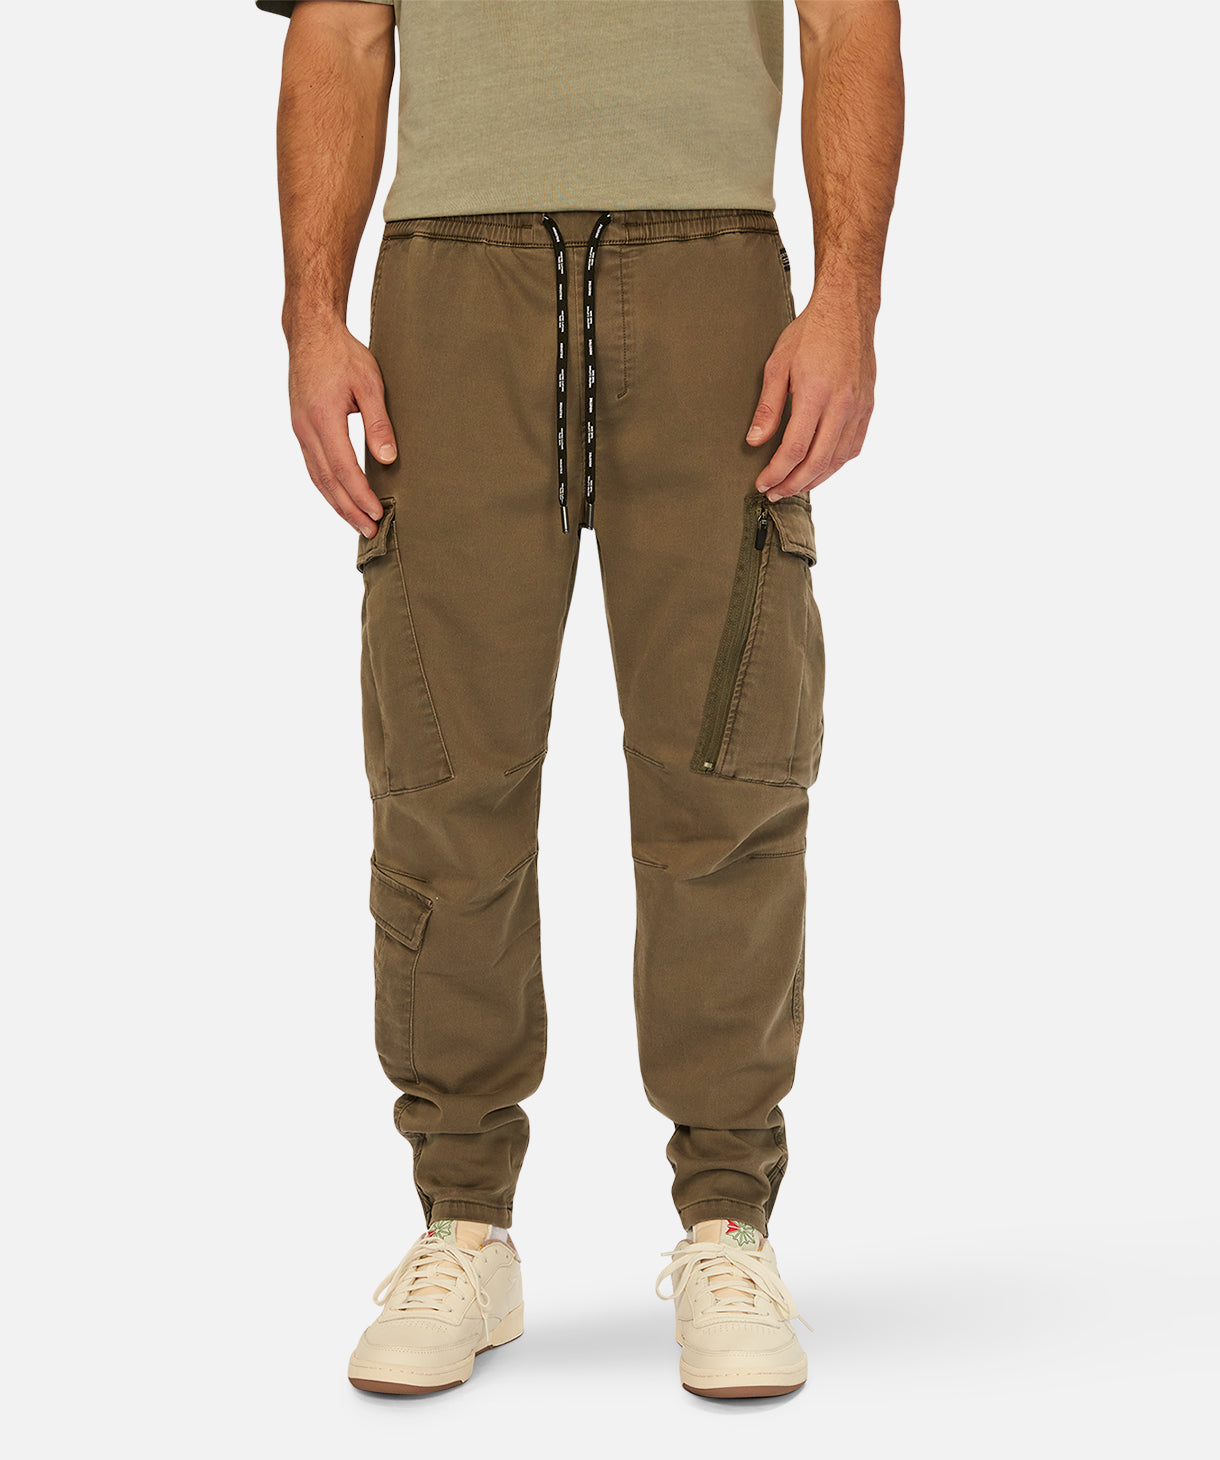 YODETEY Men'S Cargo Trousers Work Wear Combat Safety Cargo 6 Pocket Full  Pants - Walmart.com